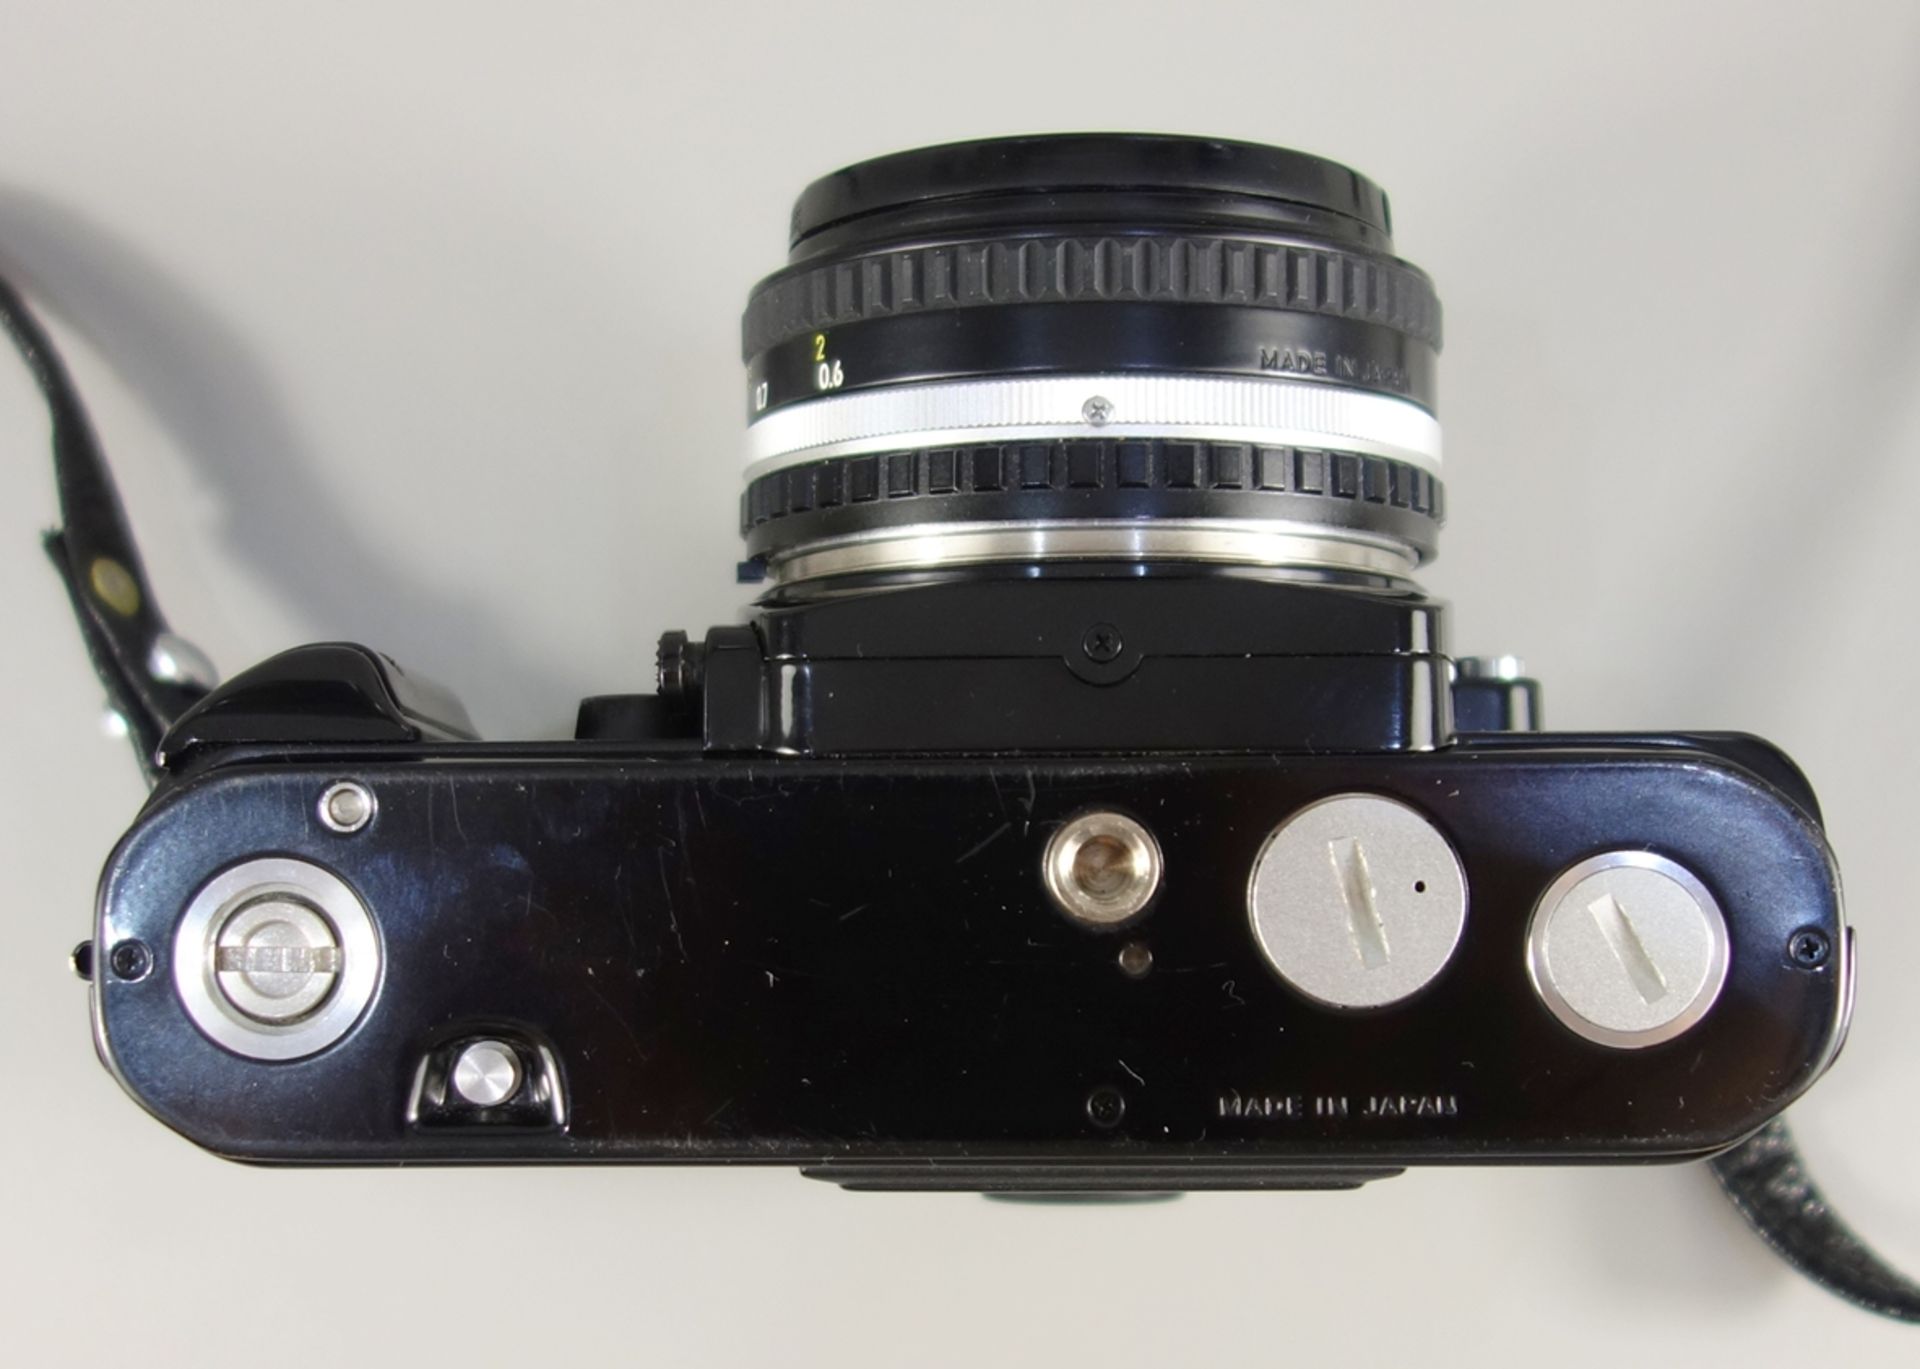 Nikon FA, Spiegelreflexkamera, schwarz, Serien-Nr. 5162031, mit Objektiv Nikon - Bild 4 aus 4